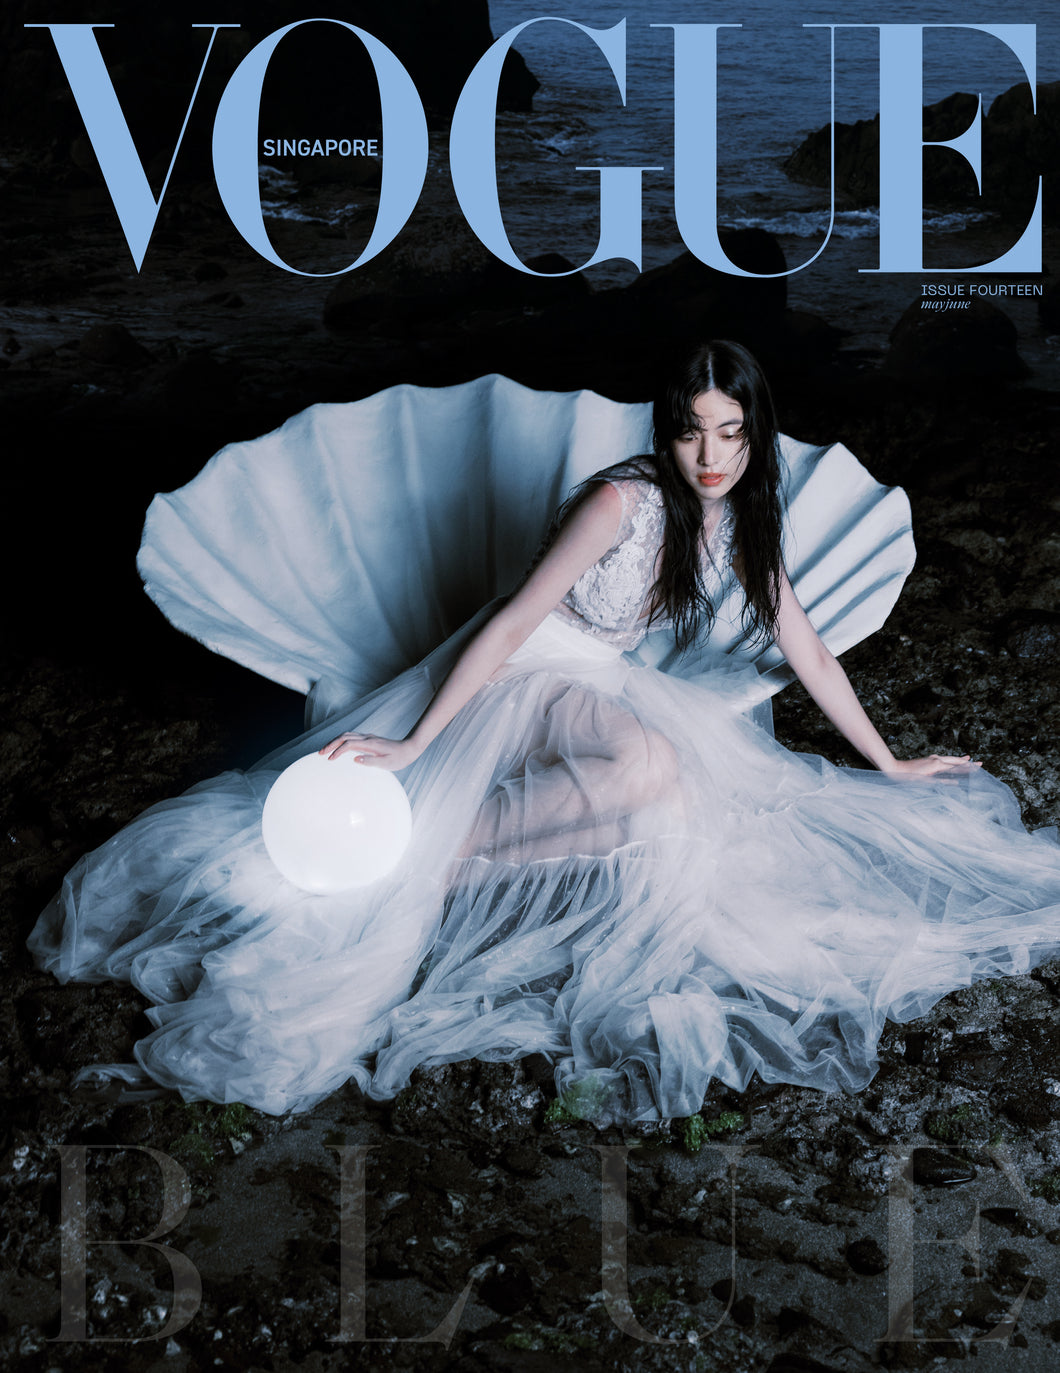 Vogue Singapore: Issue Fourteen, BLUE